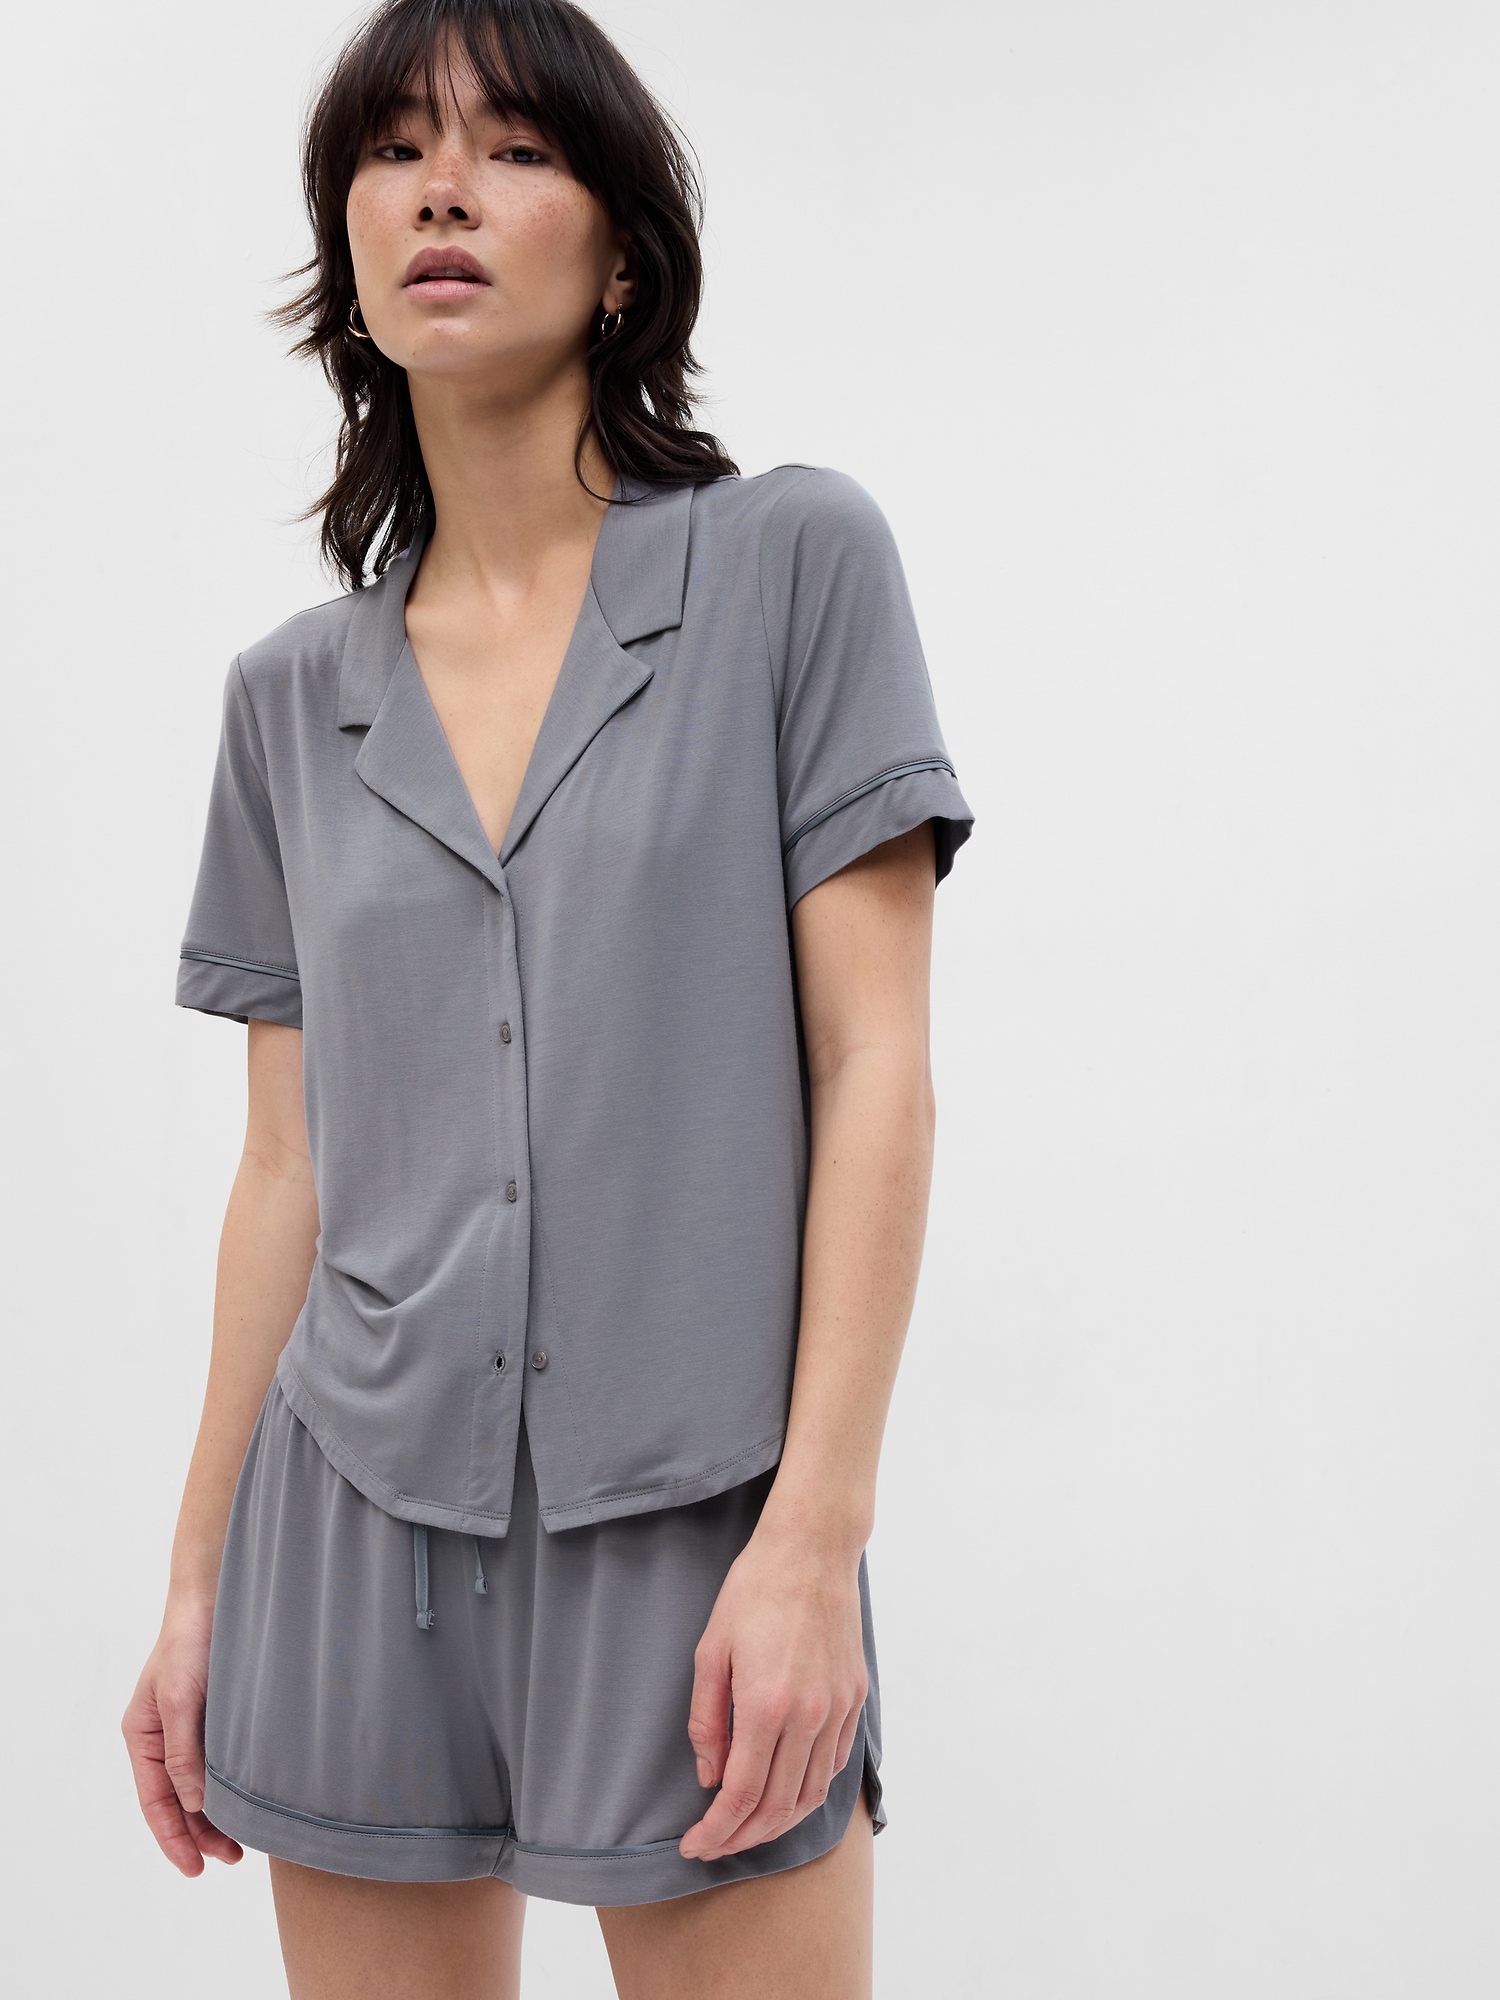 Gap Modal Pajama Shirt gray. 1